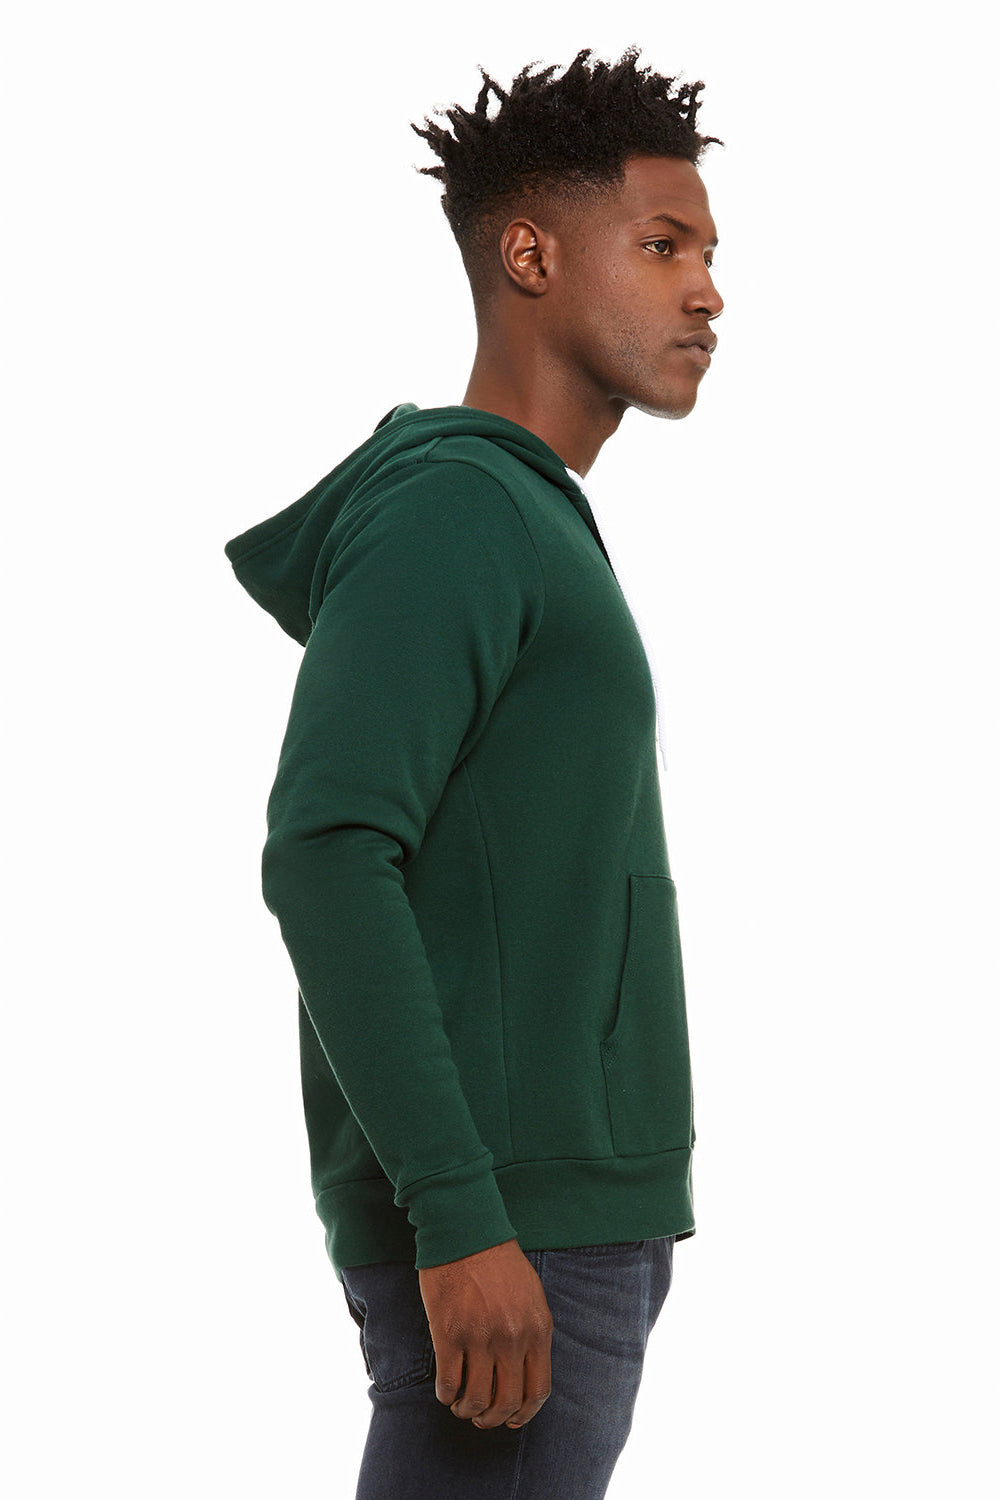 Bella + Canvas BC3739/3739 Mens Fleece Full Zip Hooded Sweatshirt Hoodie Forest Green Model Side